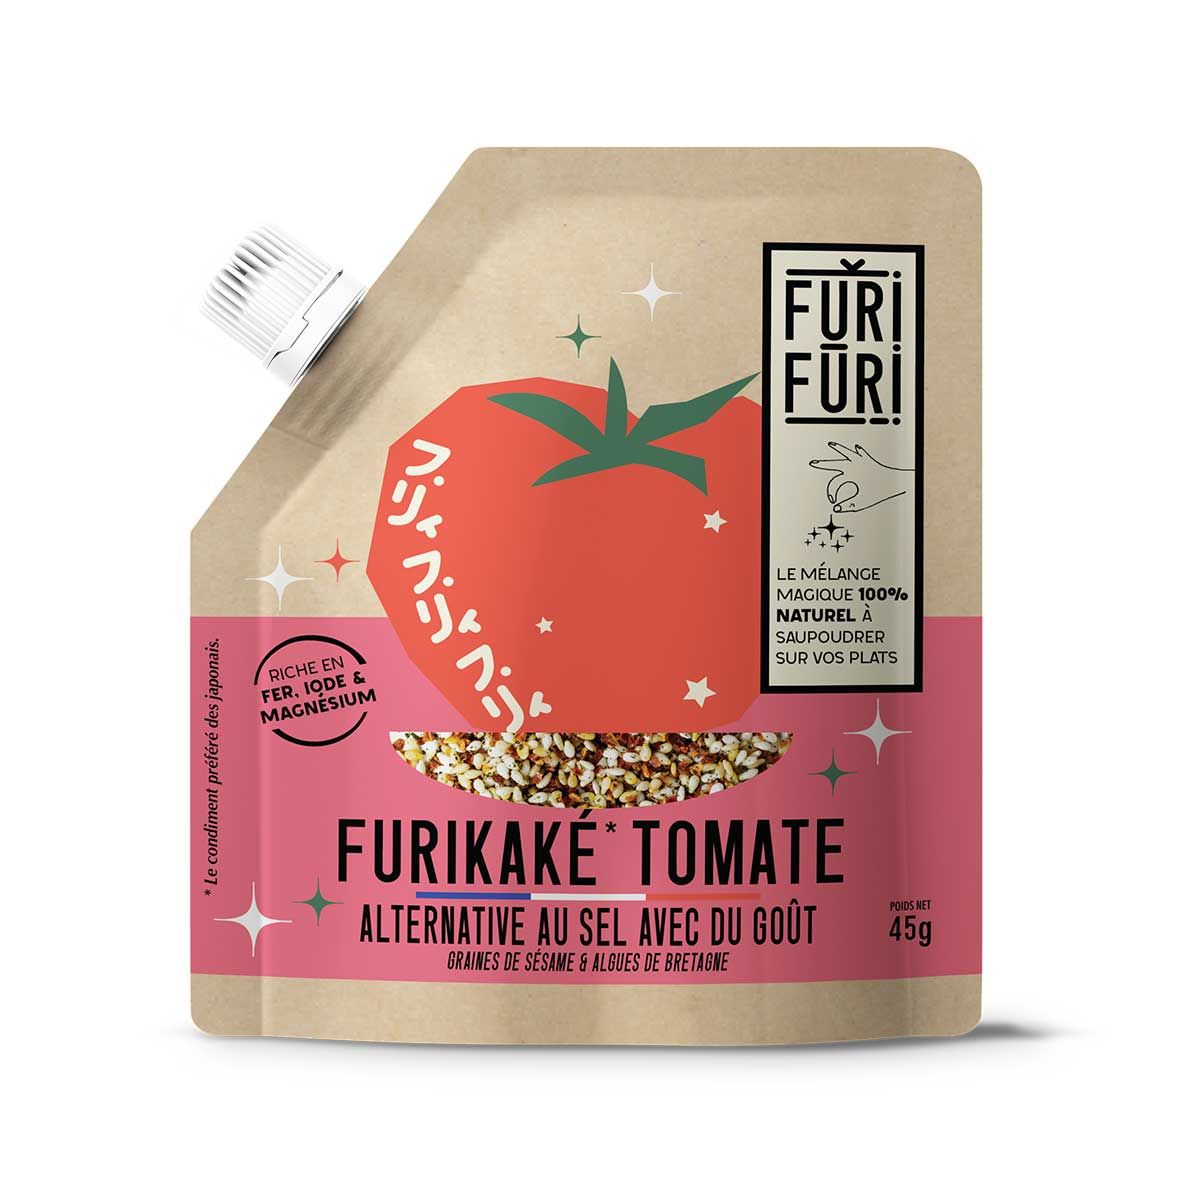 Furikaké Tomate - Alternative au sel - FuriFuri 